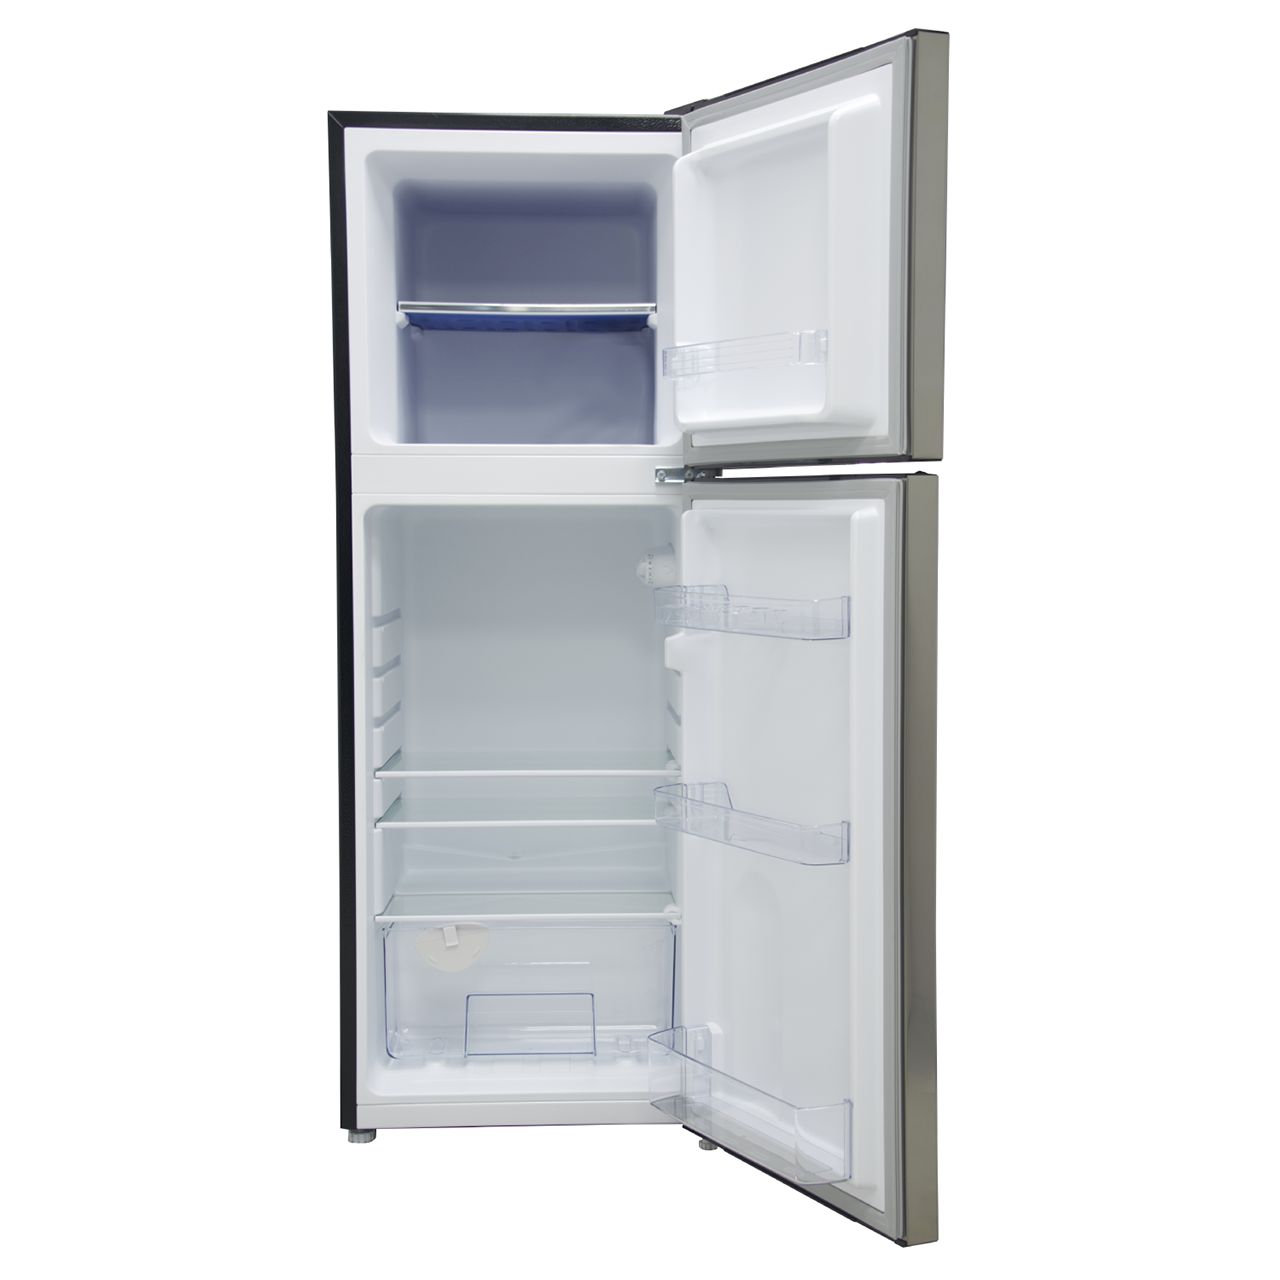  - Холодильник для офиса HD-142